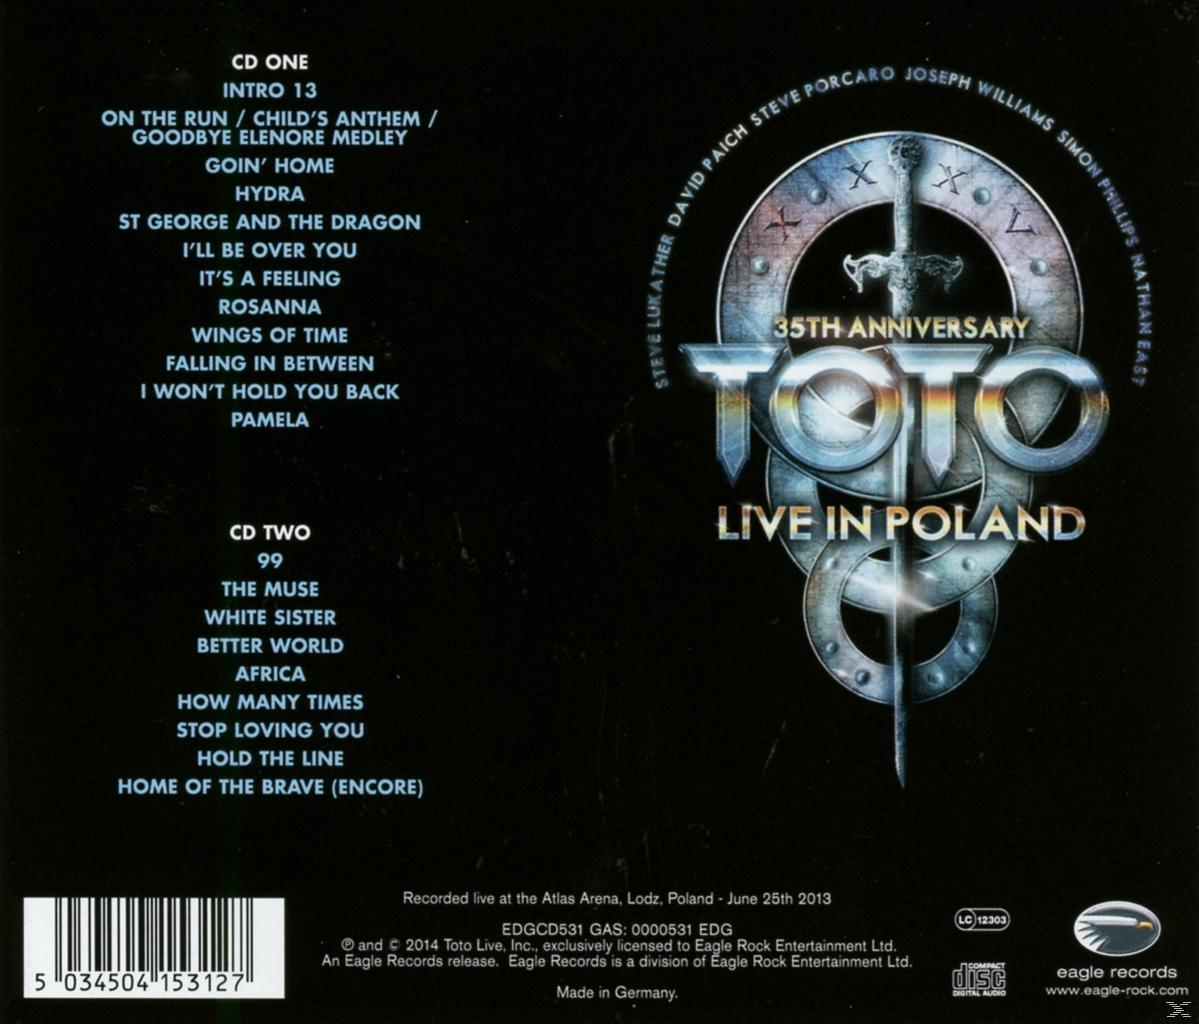 35th Anniversary (CD) In Toto Poland Tour-Live - -